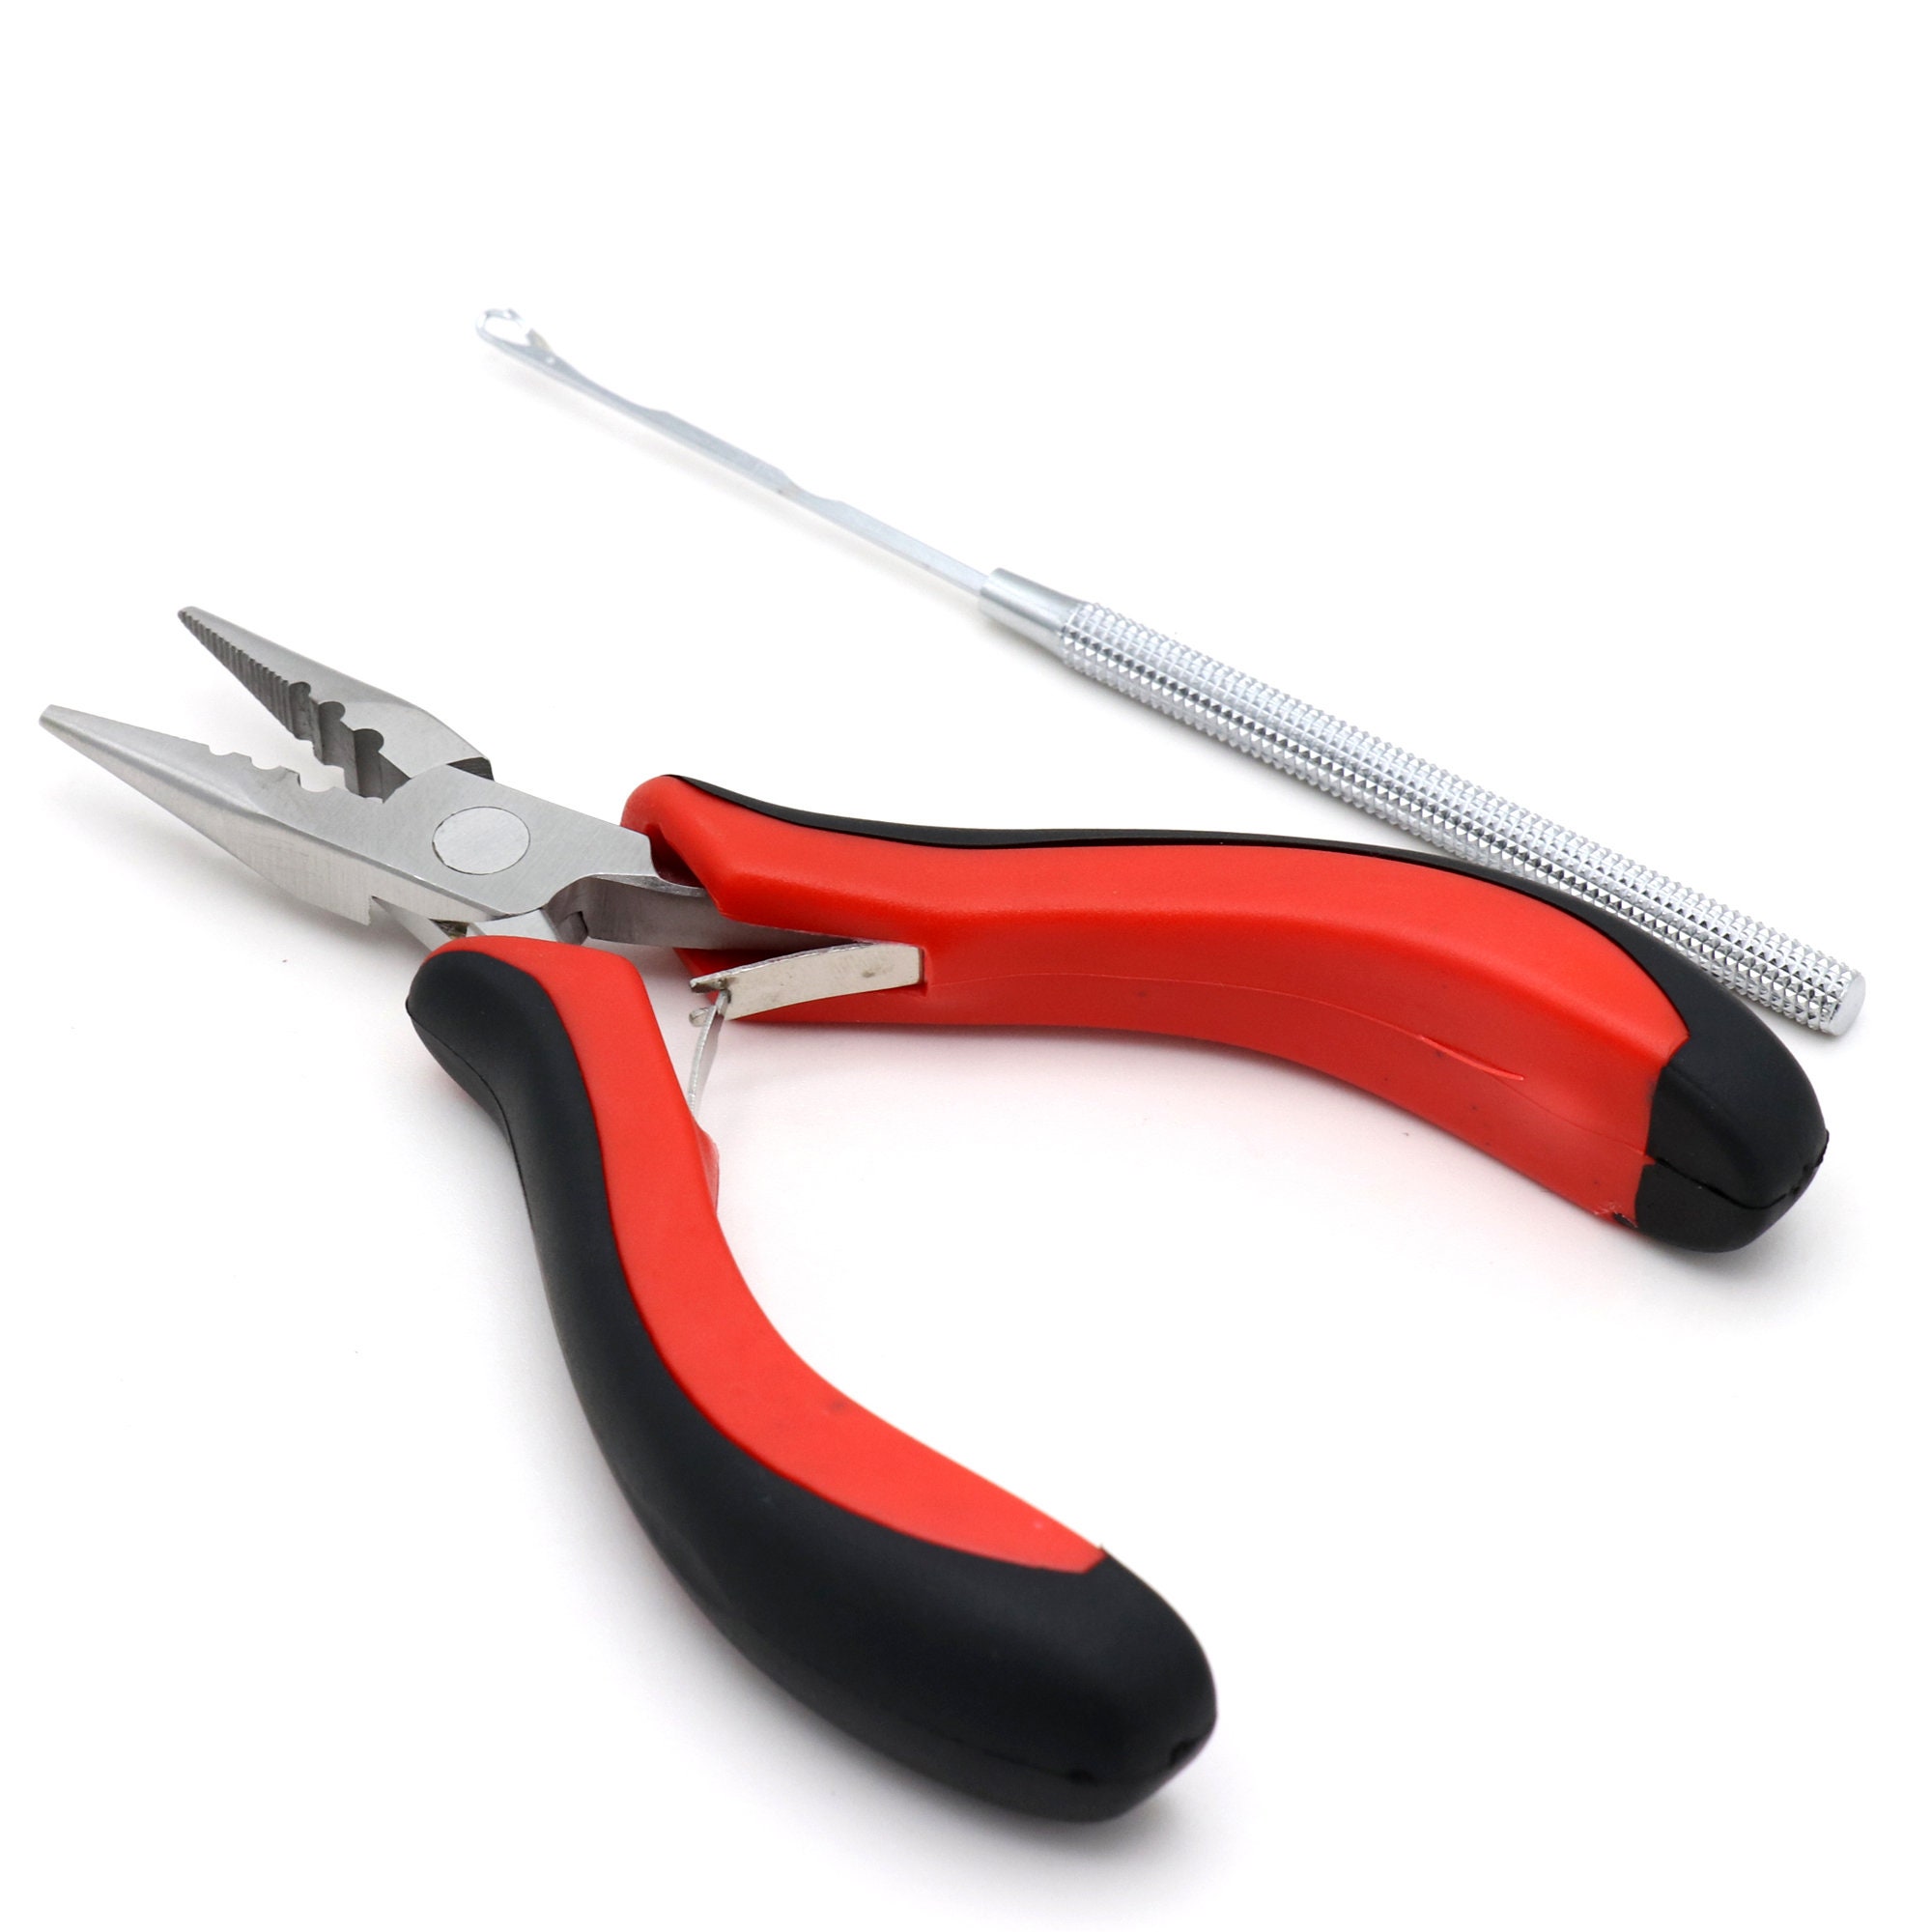 Professional Hair Extension Tools Kit Ladies Stainless Steel Hair